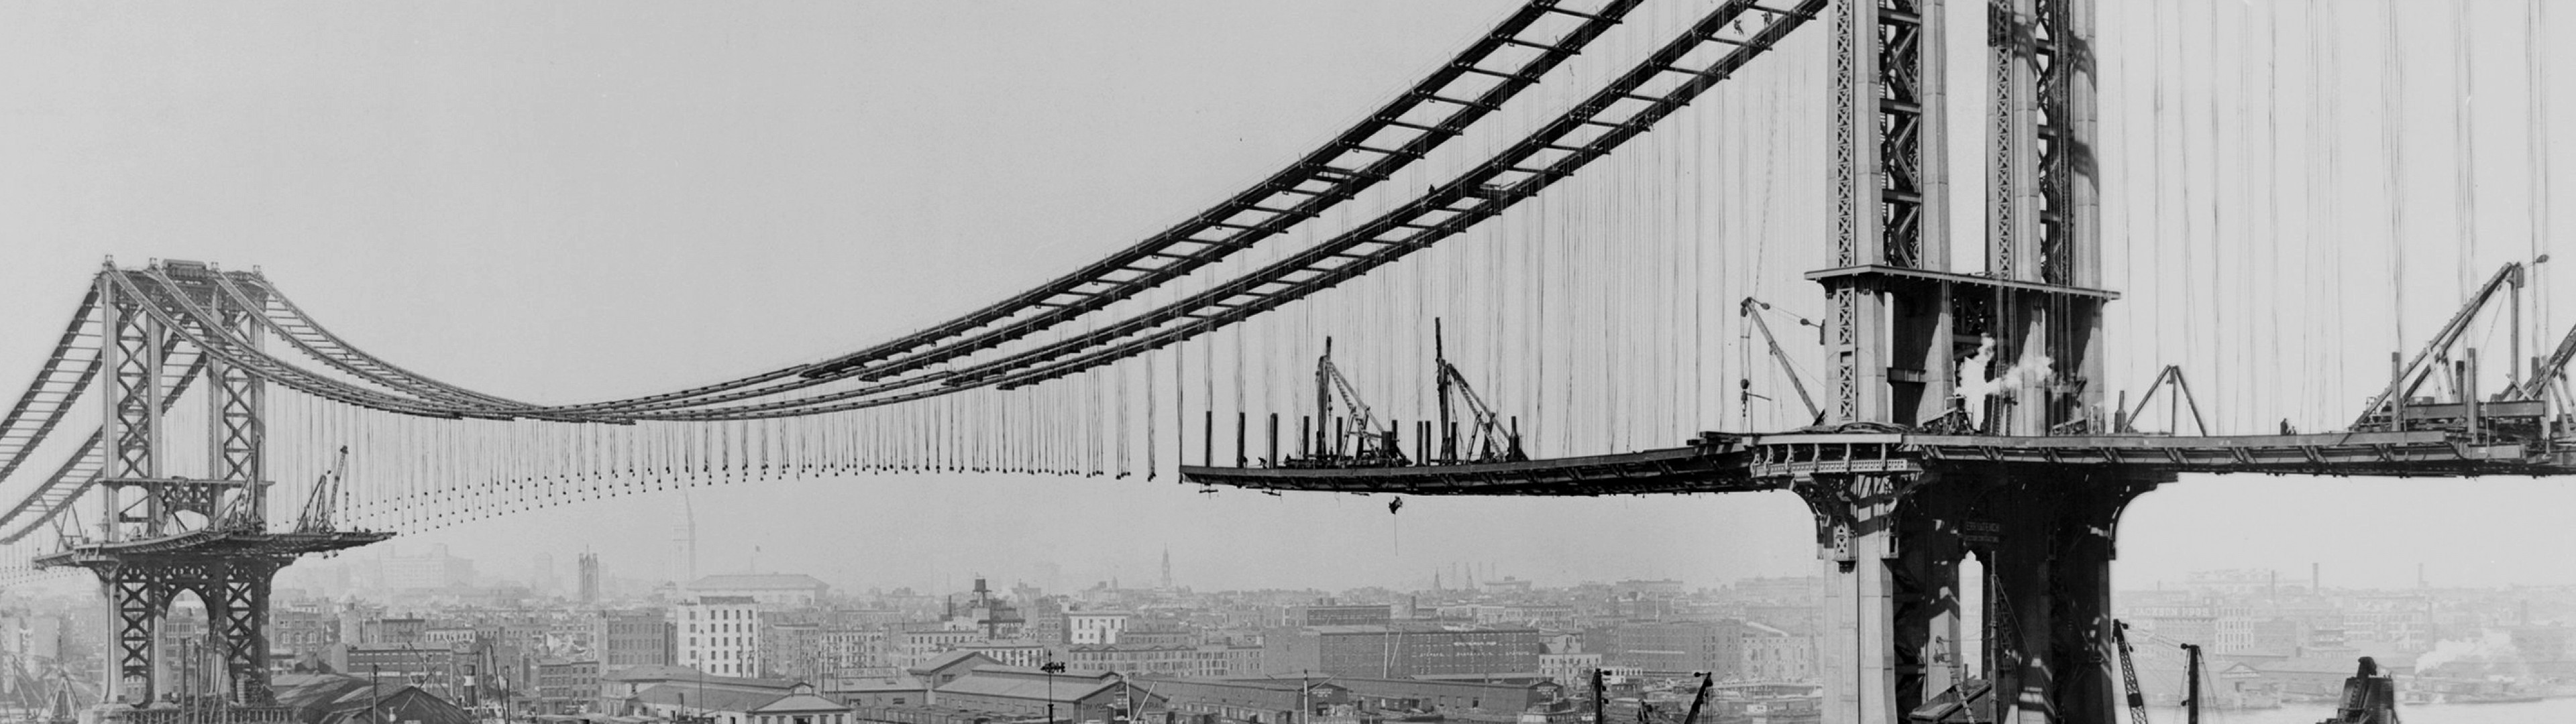 Construction Manhattan Bridge Old Photos 3840x1080